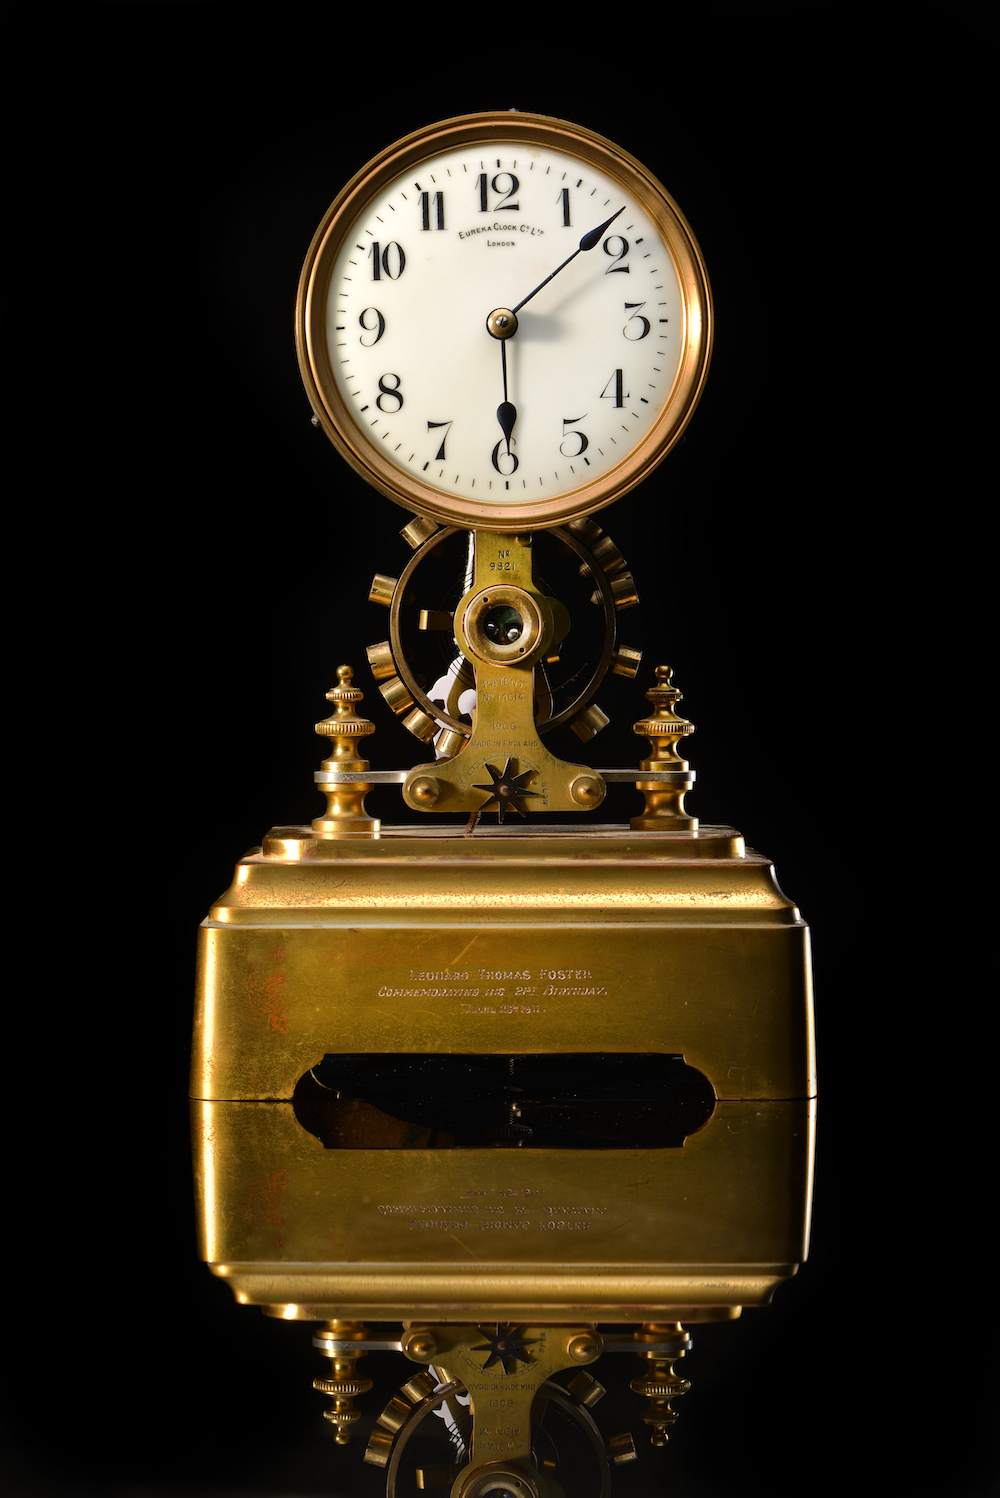 An Electric Eureka Clock Co Ltd London Mantle Clock, Sold For £1200